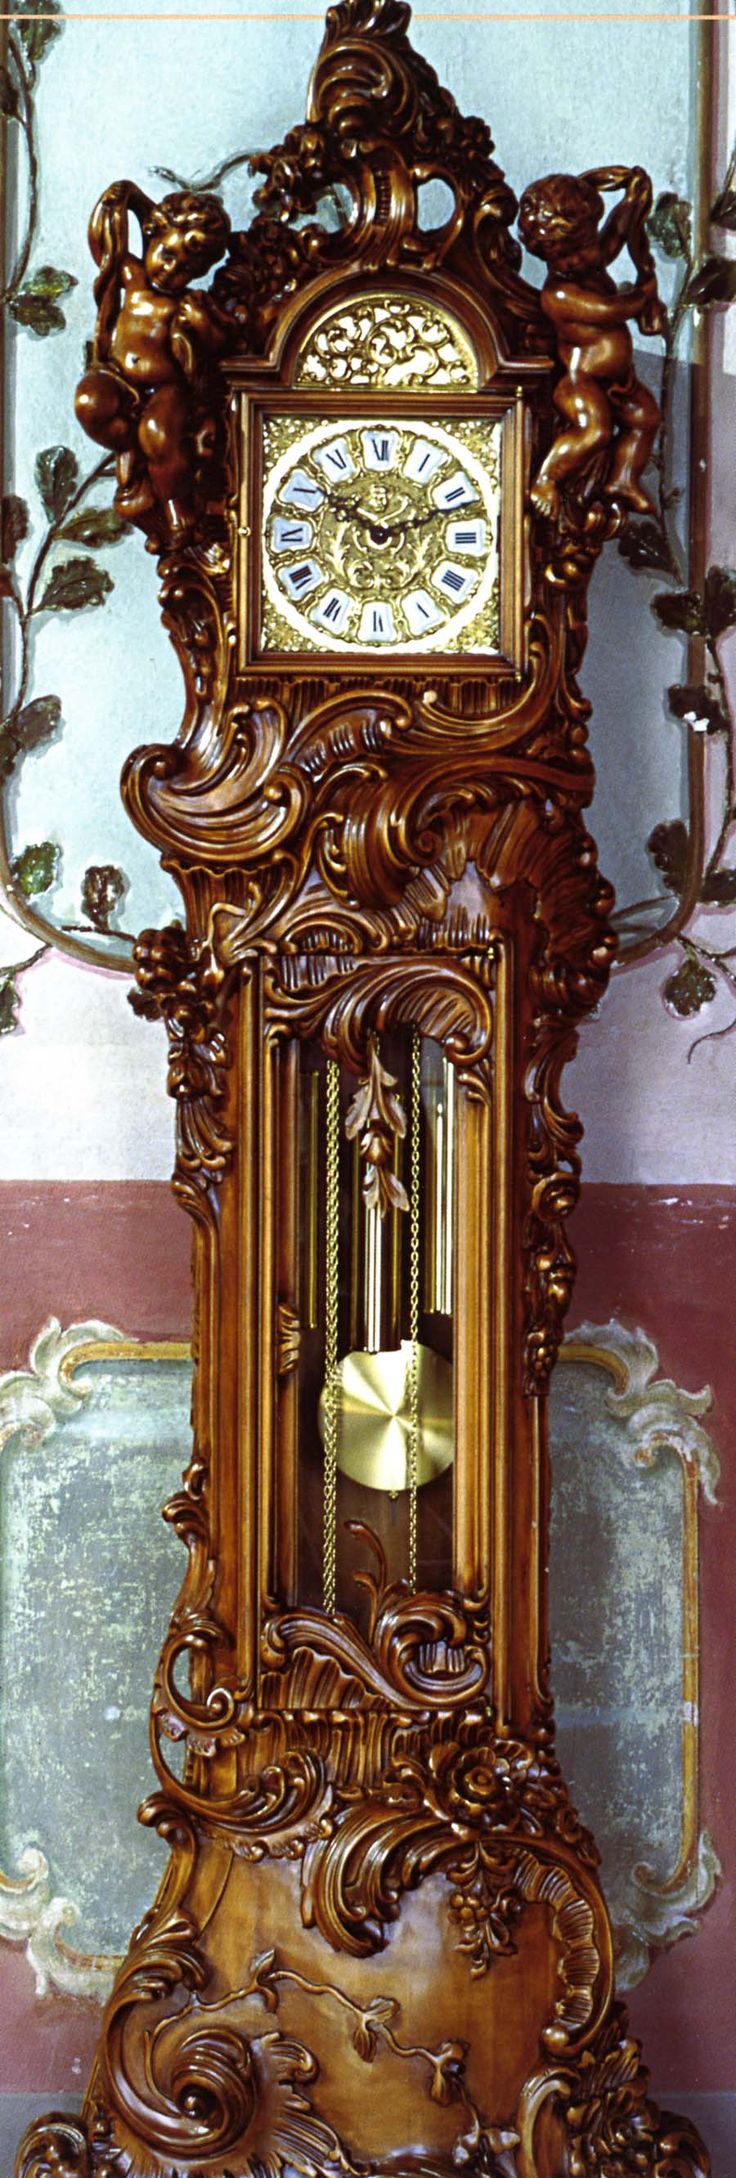 Ornately carved Le Ore grandfather clock. (Italian)